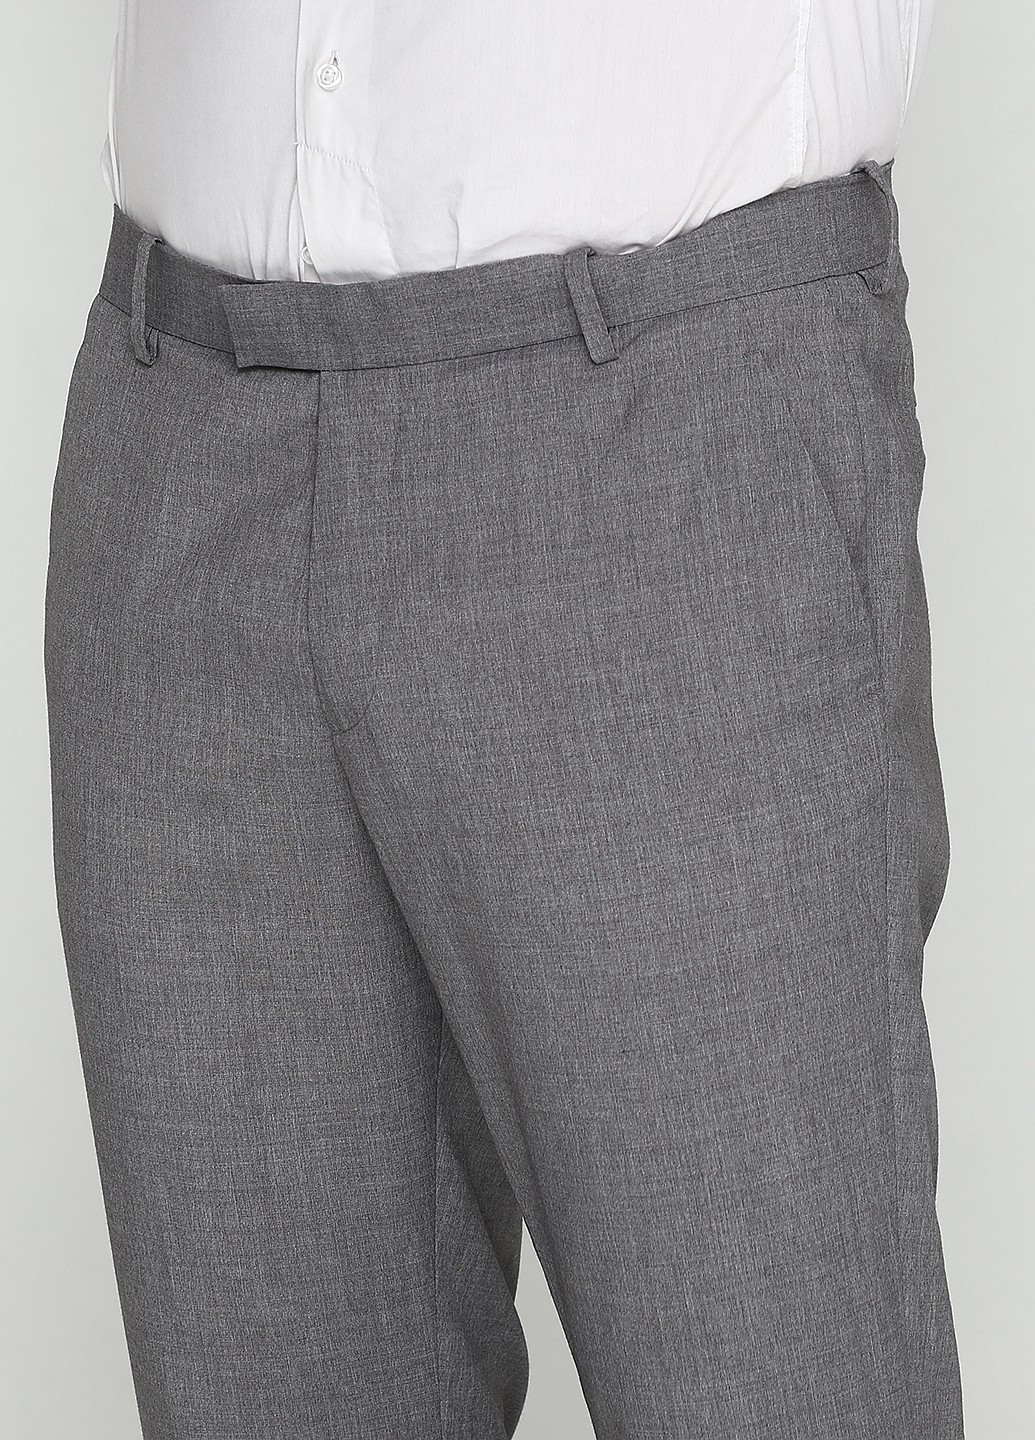 Светло-серые классические демисезонные классические брюки H&M